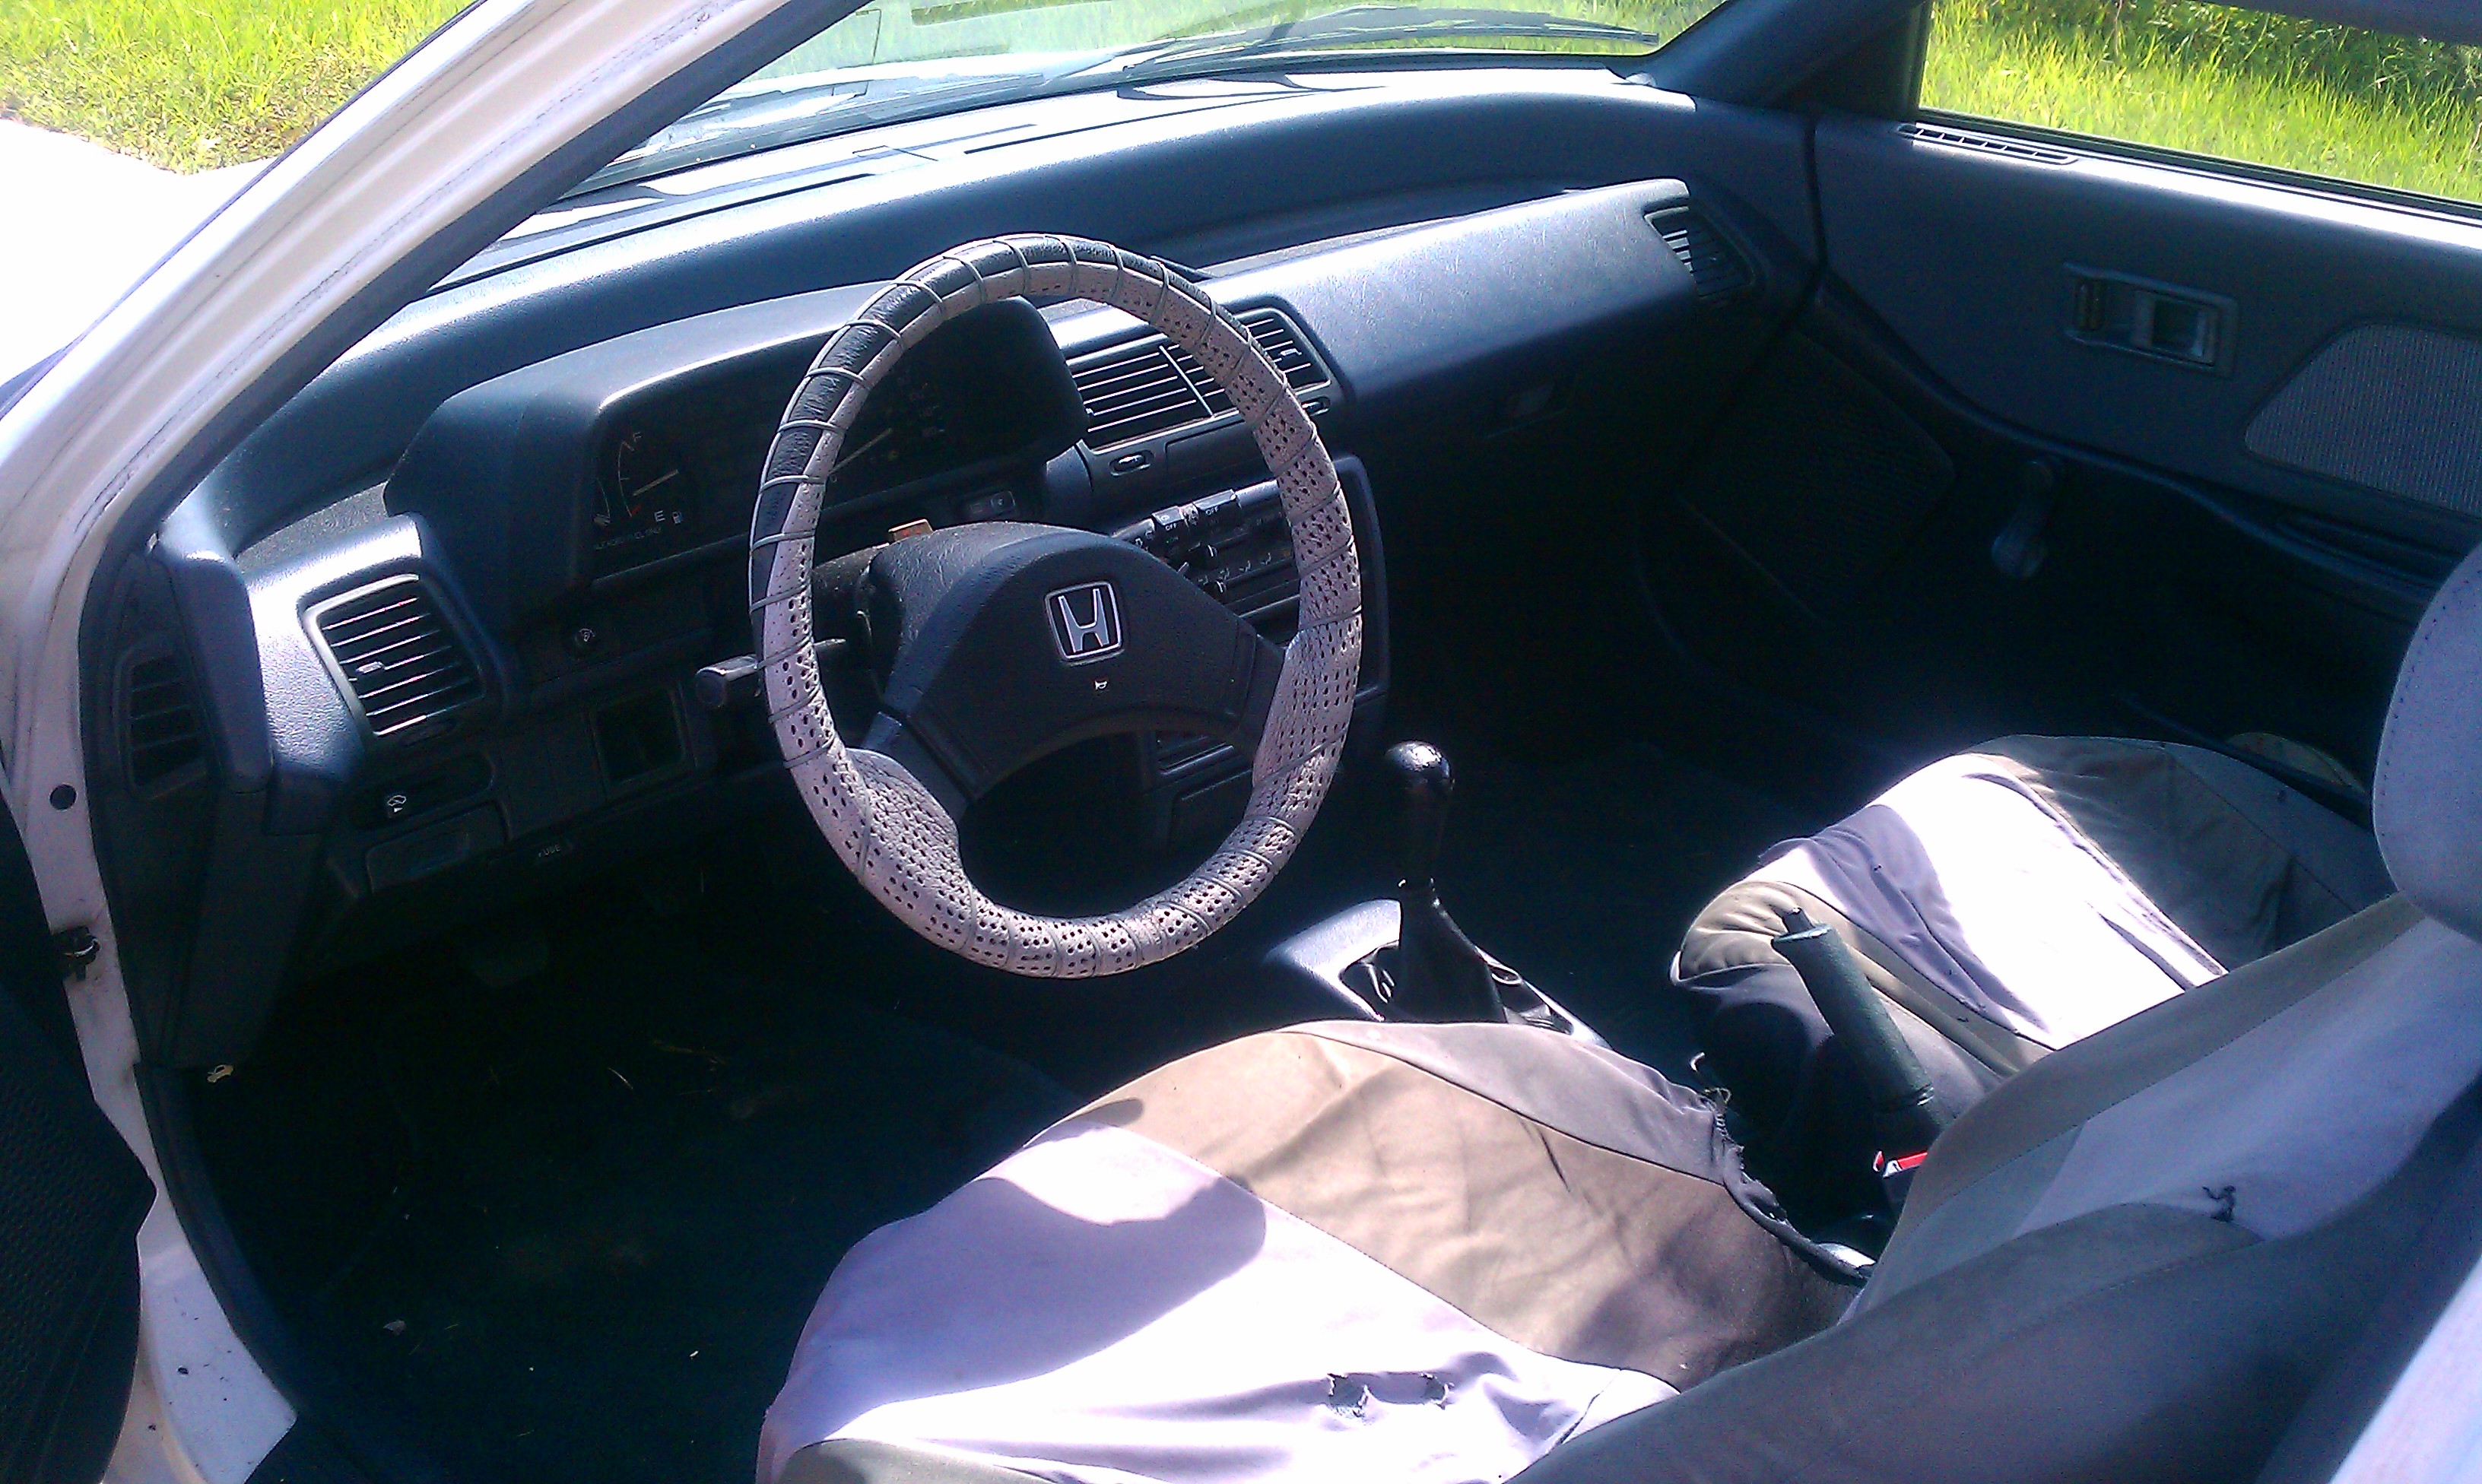 1989 Honda Civic Dx Hatch White 5 Speed No Mods 1550 Firm